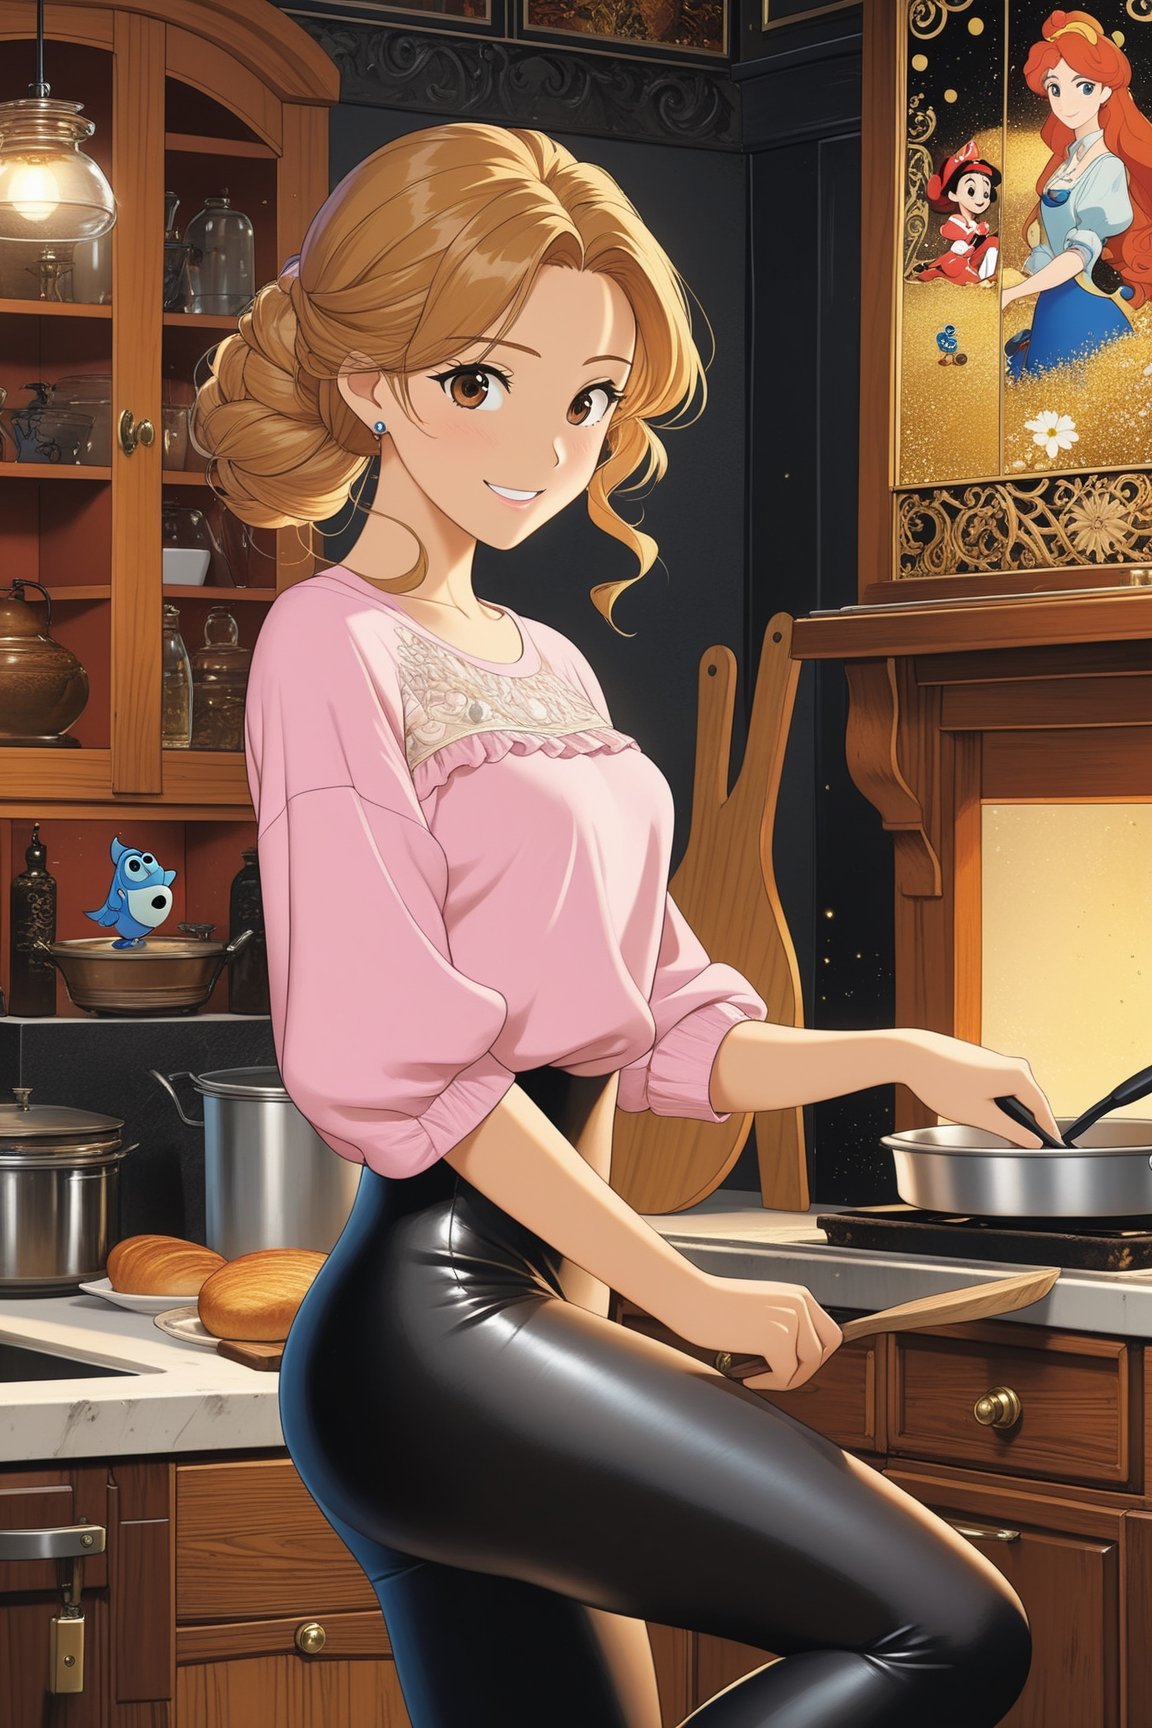 Highly detailed anime of a beautiful girl cooking in kitchen,20yo,1 girl,Big smile,short brown hair,[dark] brown skin,wearing a pink shirt and black leggings
BREAK
[backdrop of kitchen and livingroom,TV,sofa,1boy,cluttered maximalism],(girl focus)
BREAK 
(anime vibes:1.3),(Disney Pixar-style:1.3),rule of thirds,studio photo,(masterpiece,best quality,trending on artstation,8K,Hyper-detailed,intricate details),cinematic lighting,by Karol Bak,Gustav Klimt and Hayao Miyazaki,ani_booster,real_booster,art_booster